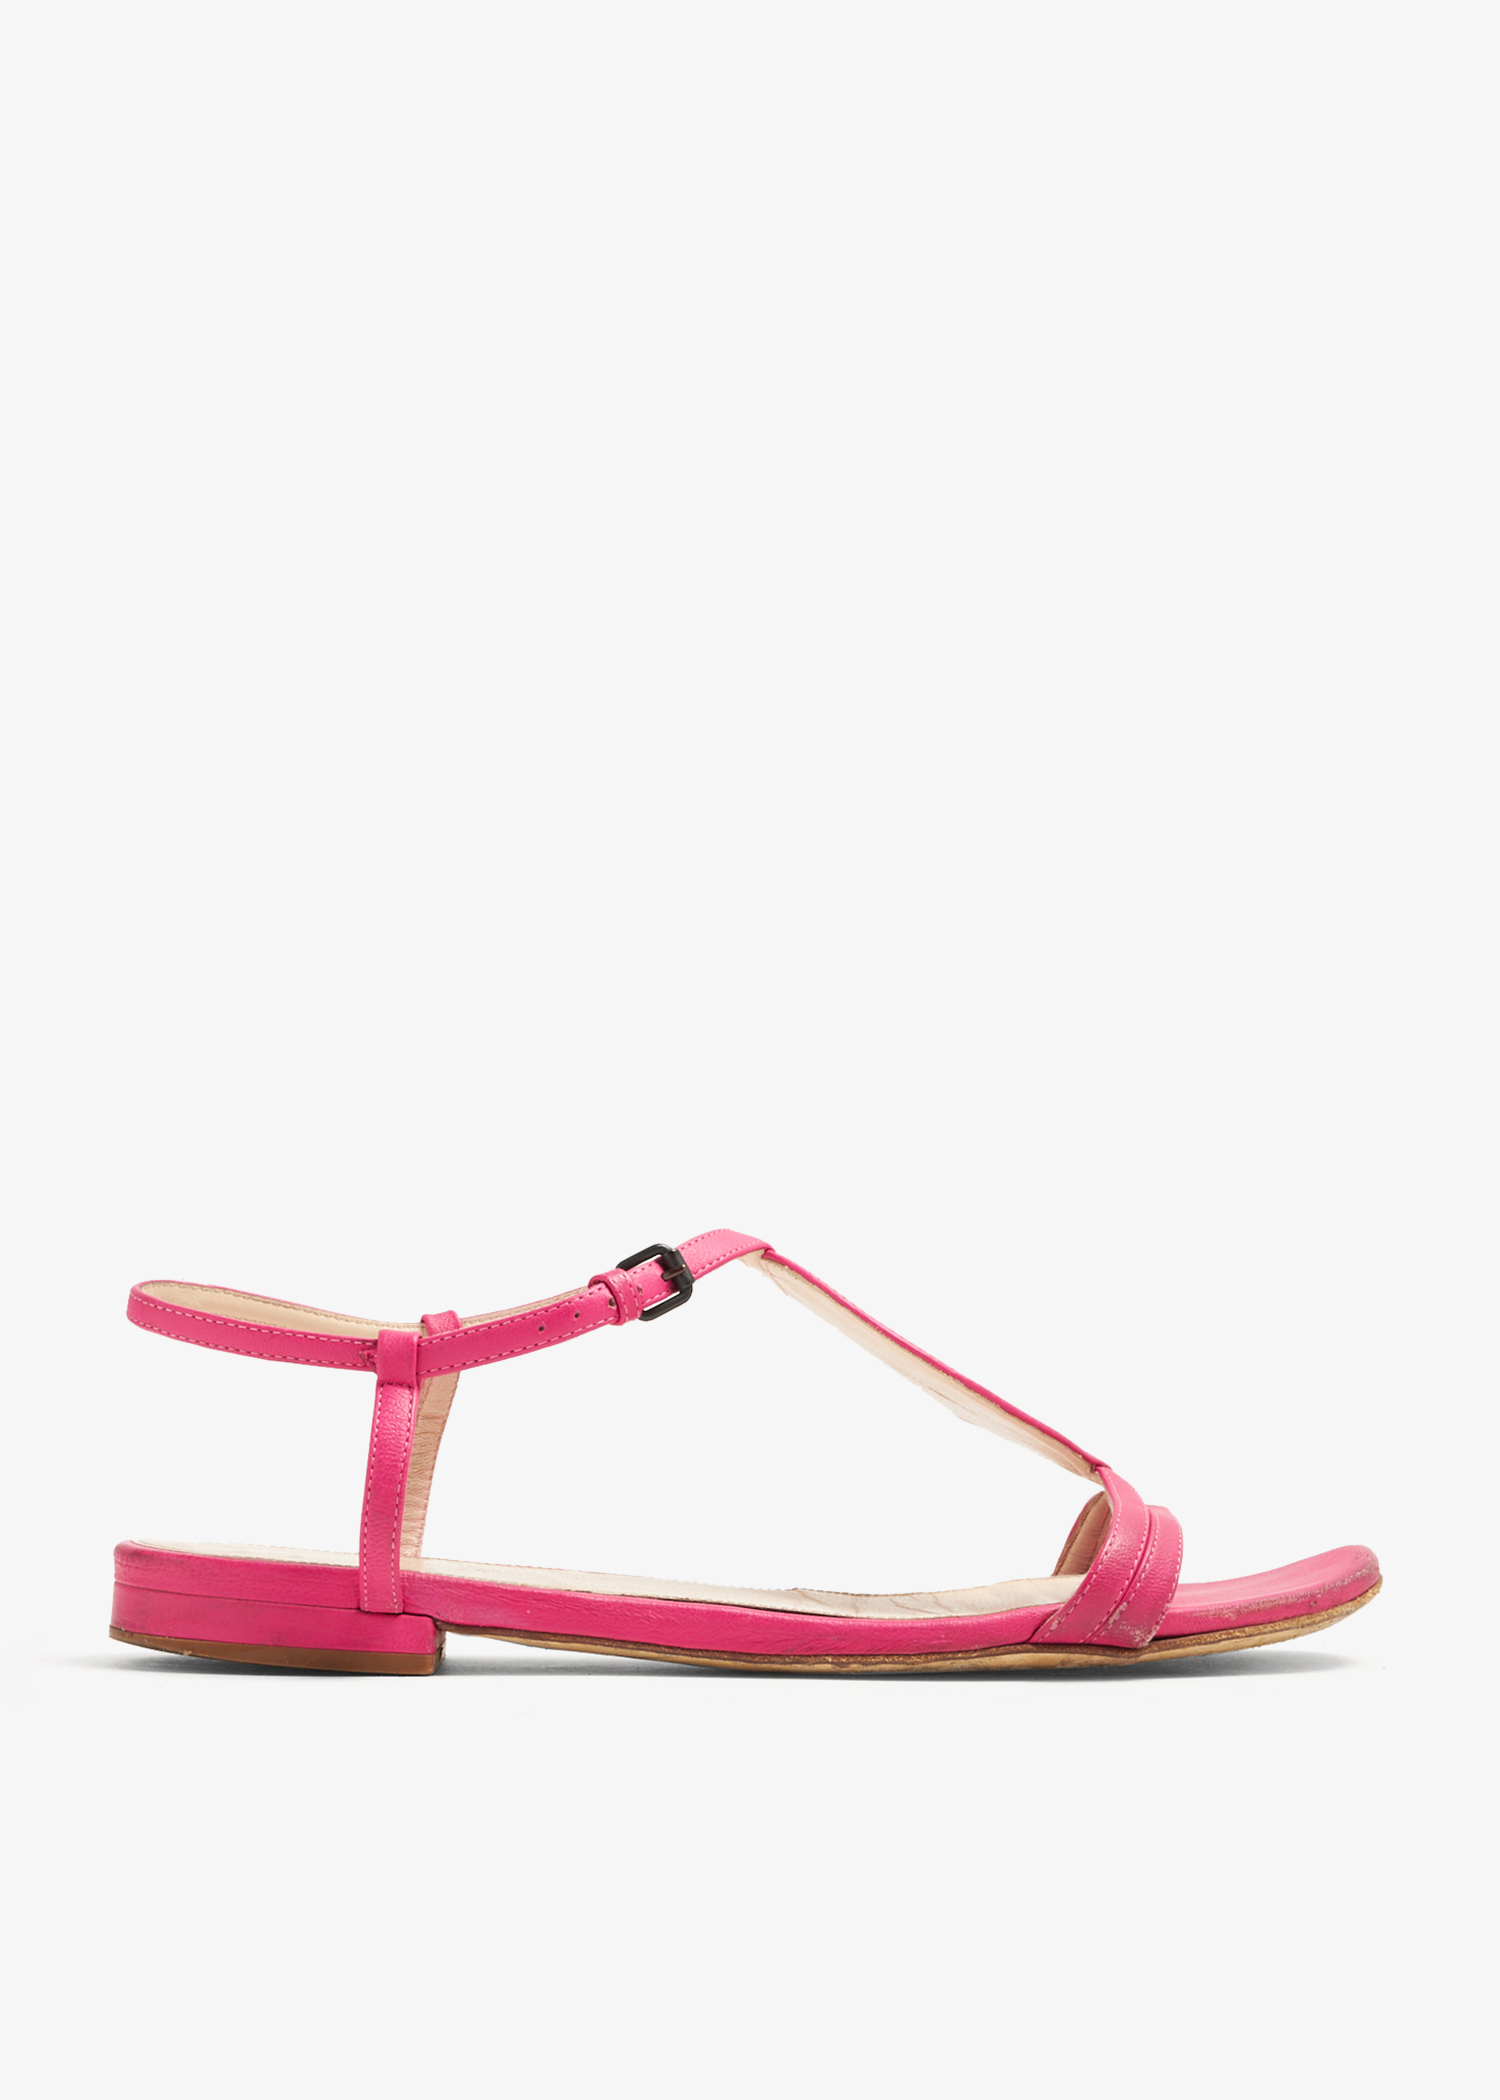 Pimfylm Pig Slippers Women's Flat Sandals Fashion Slides With Soft Leather  Slippers for Summer Hot Pink 7.5 - Walmart.com